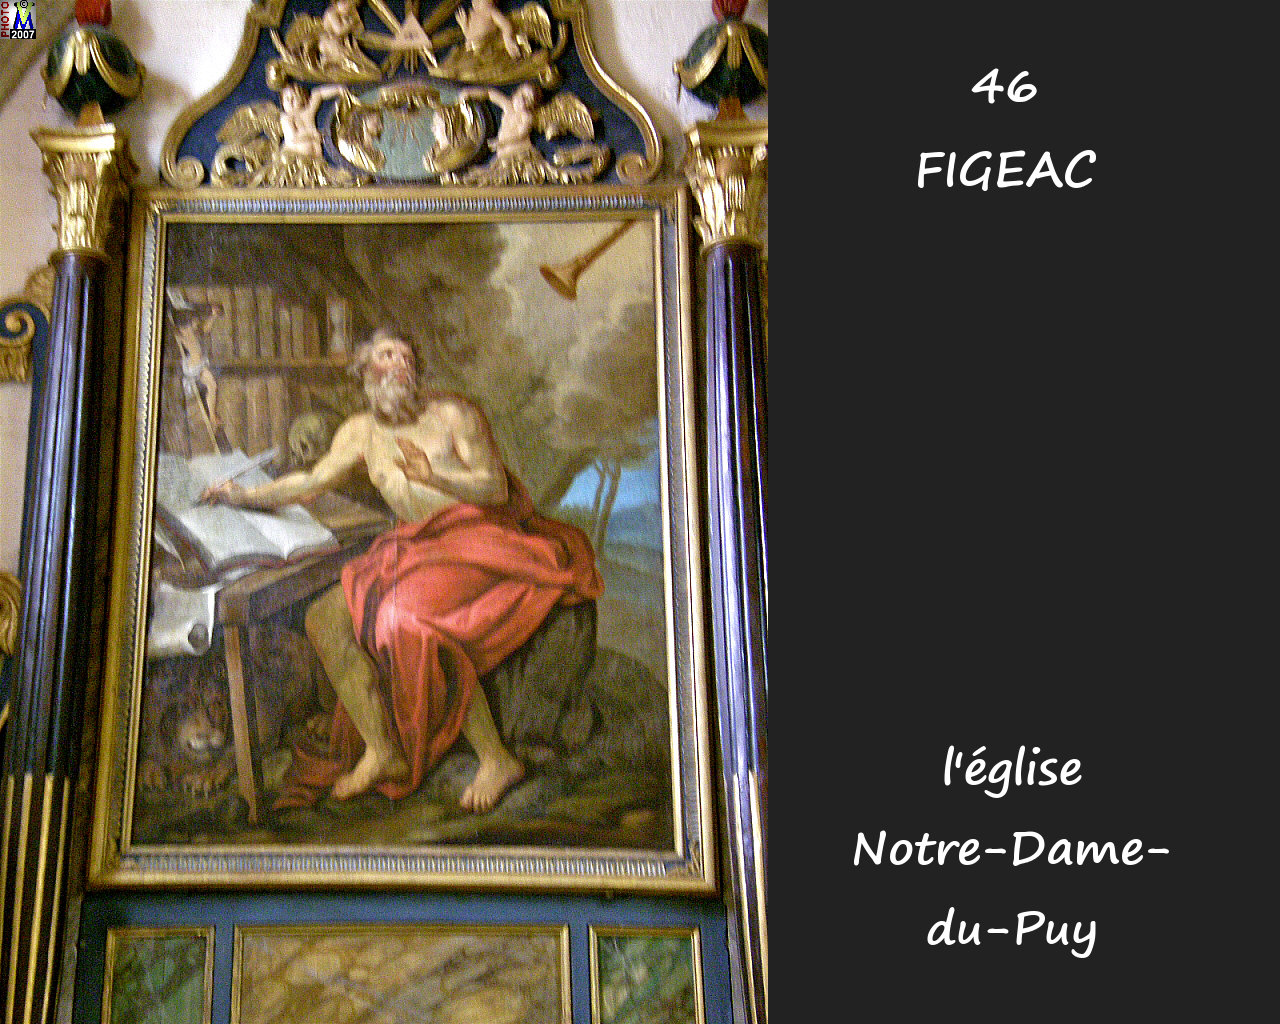 46FIGEAC_eglise-puy_234.jpg